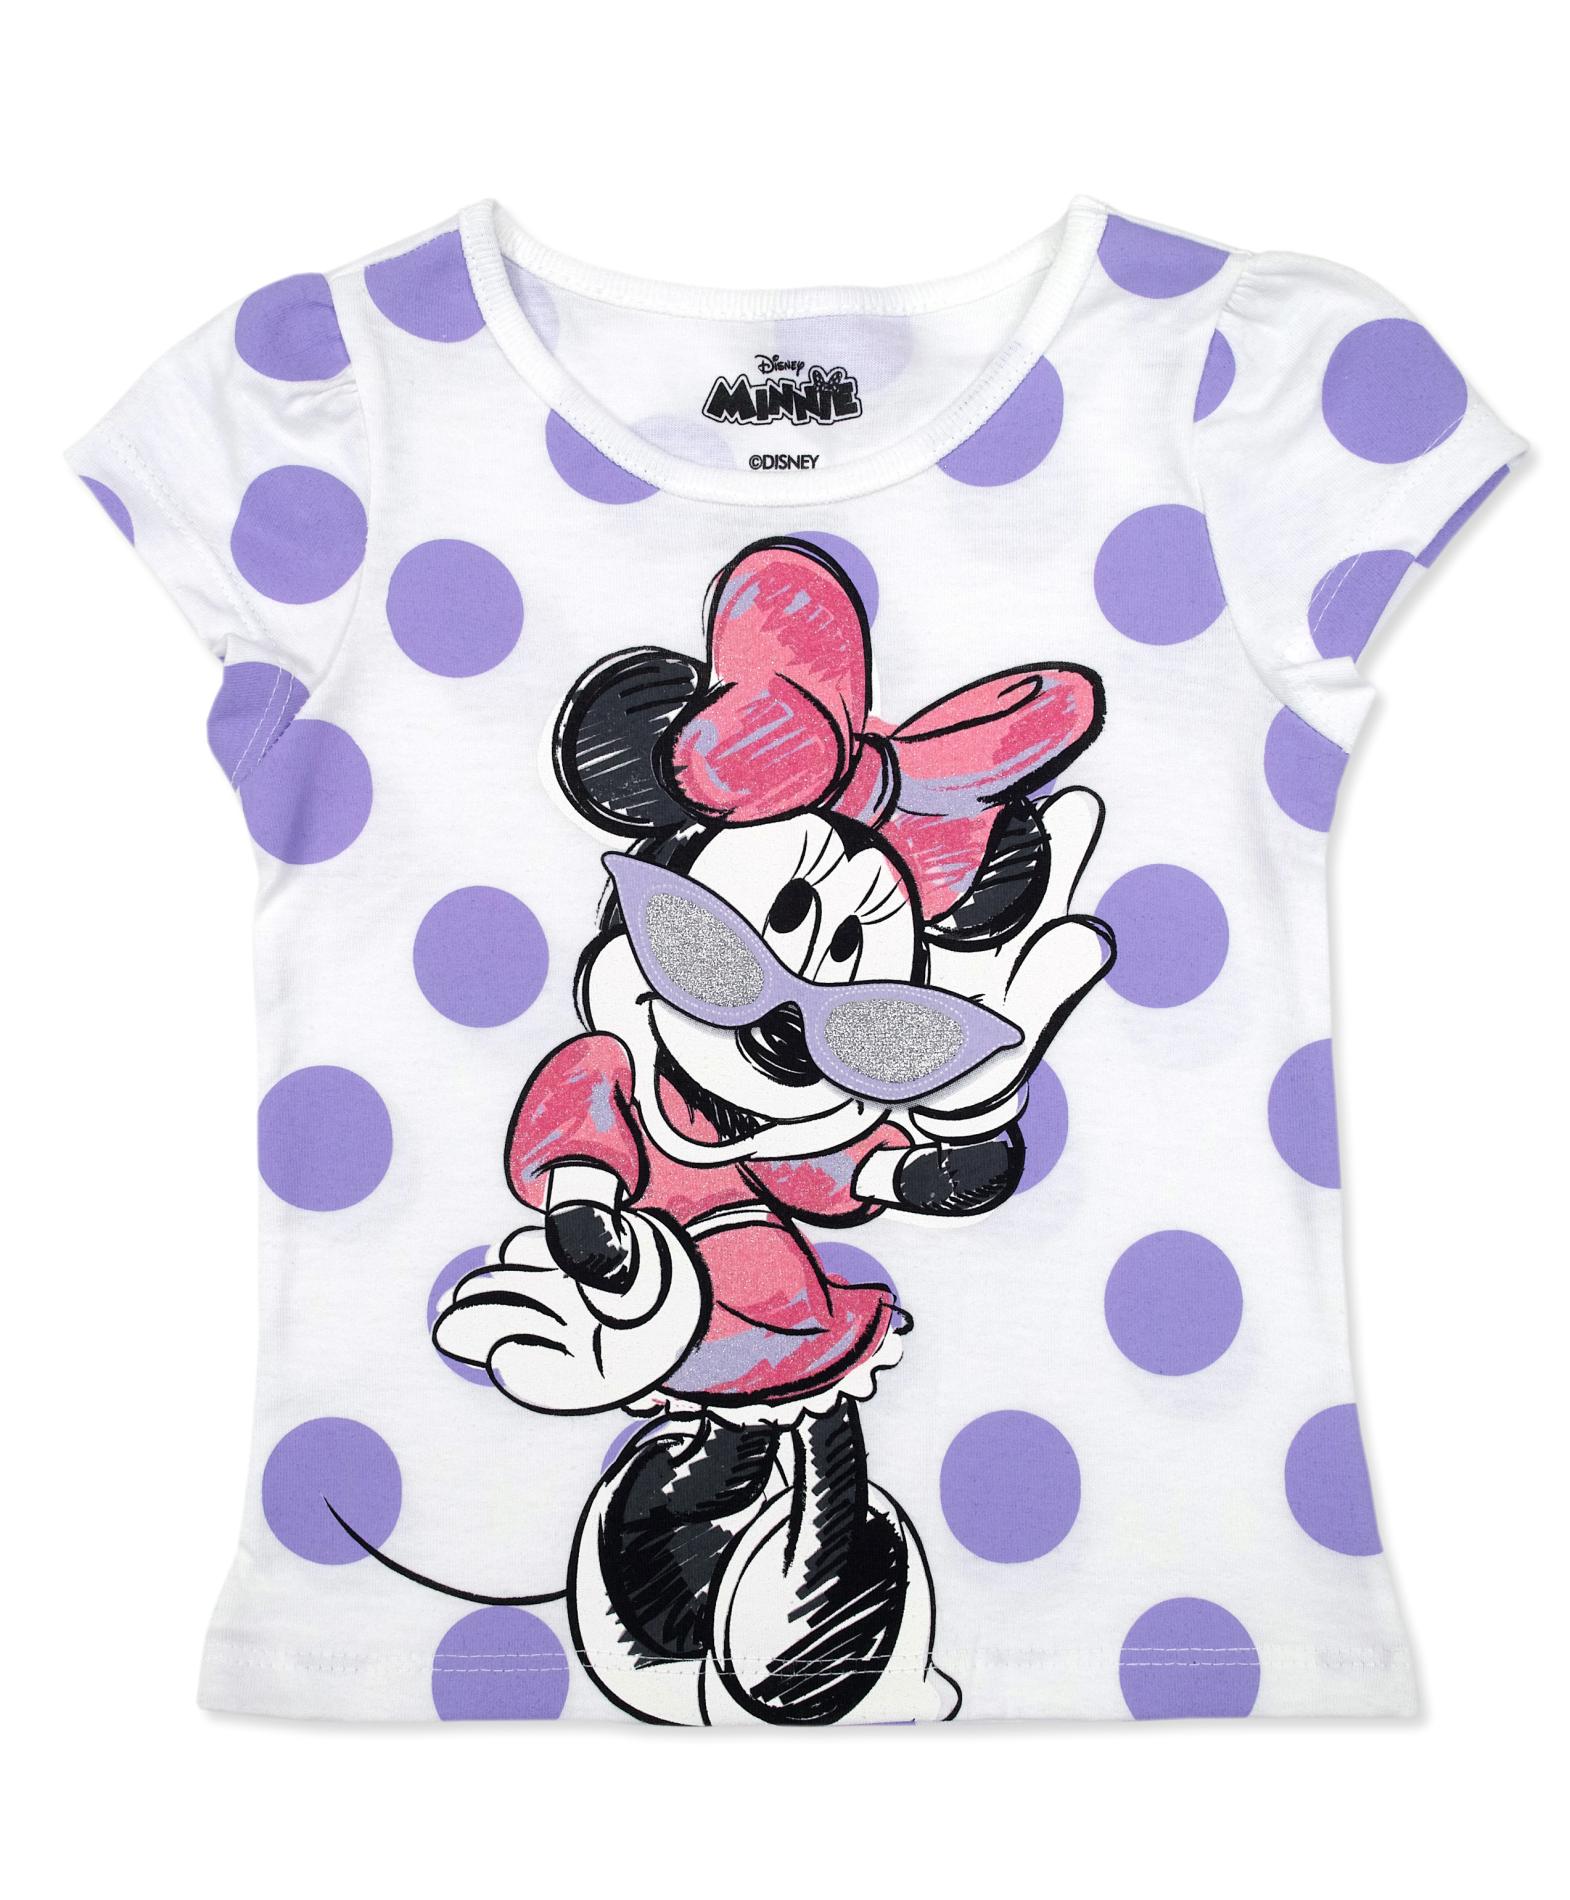 Disney Minnie Mouse Toddler Girl's Top - Polka Dot